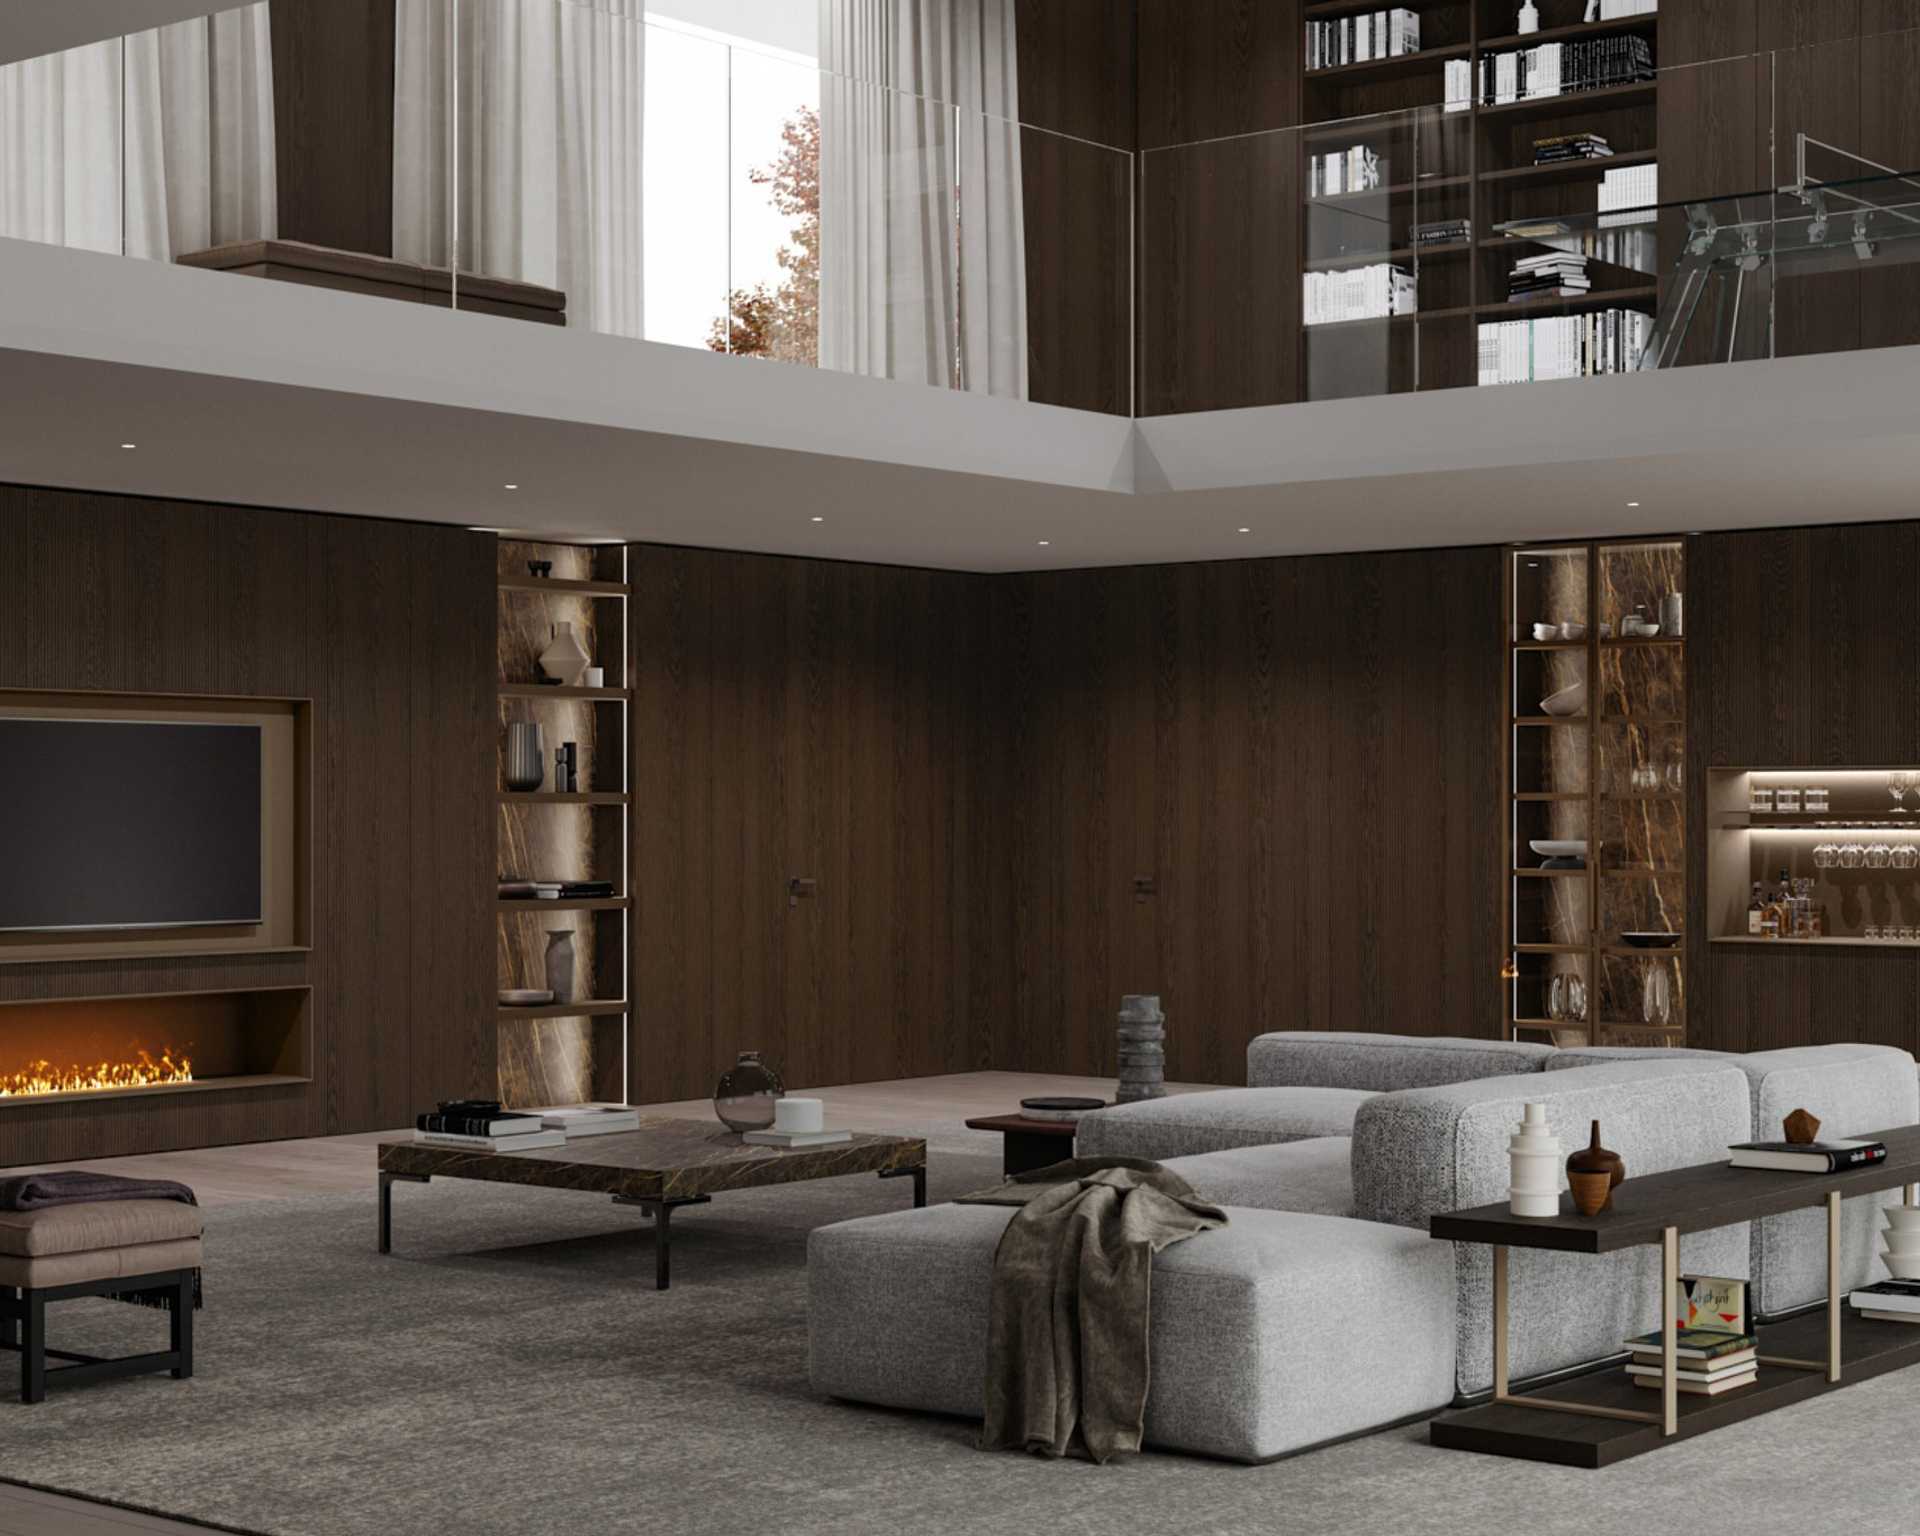 Innovative Living Room Interior Design Ideas: Sophistication Without All the “Stuff” - NOLI Modern Italian Living